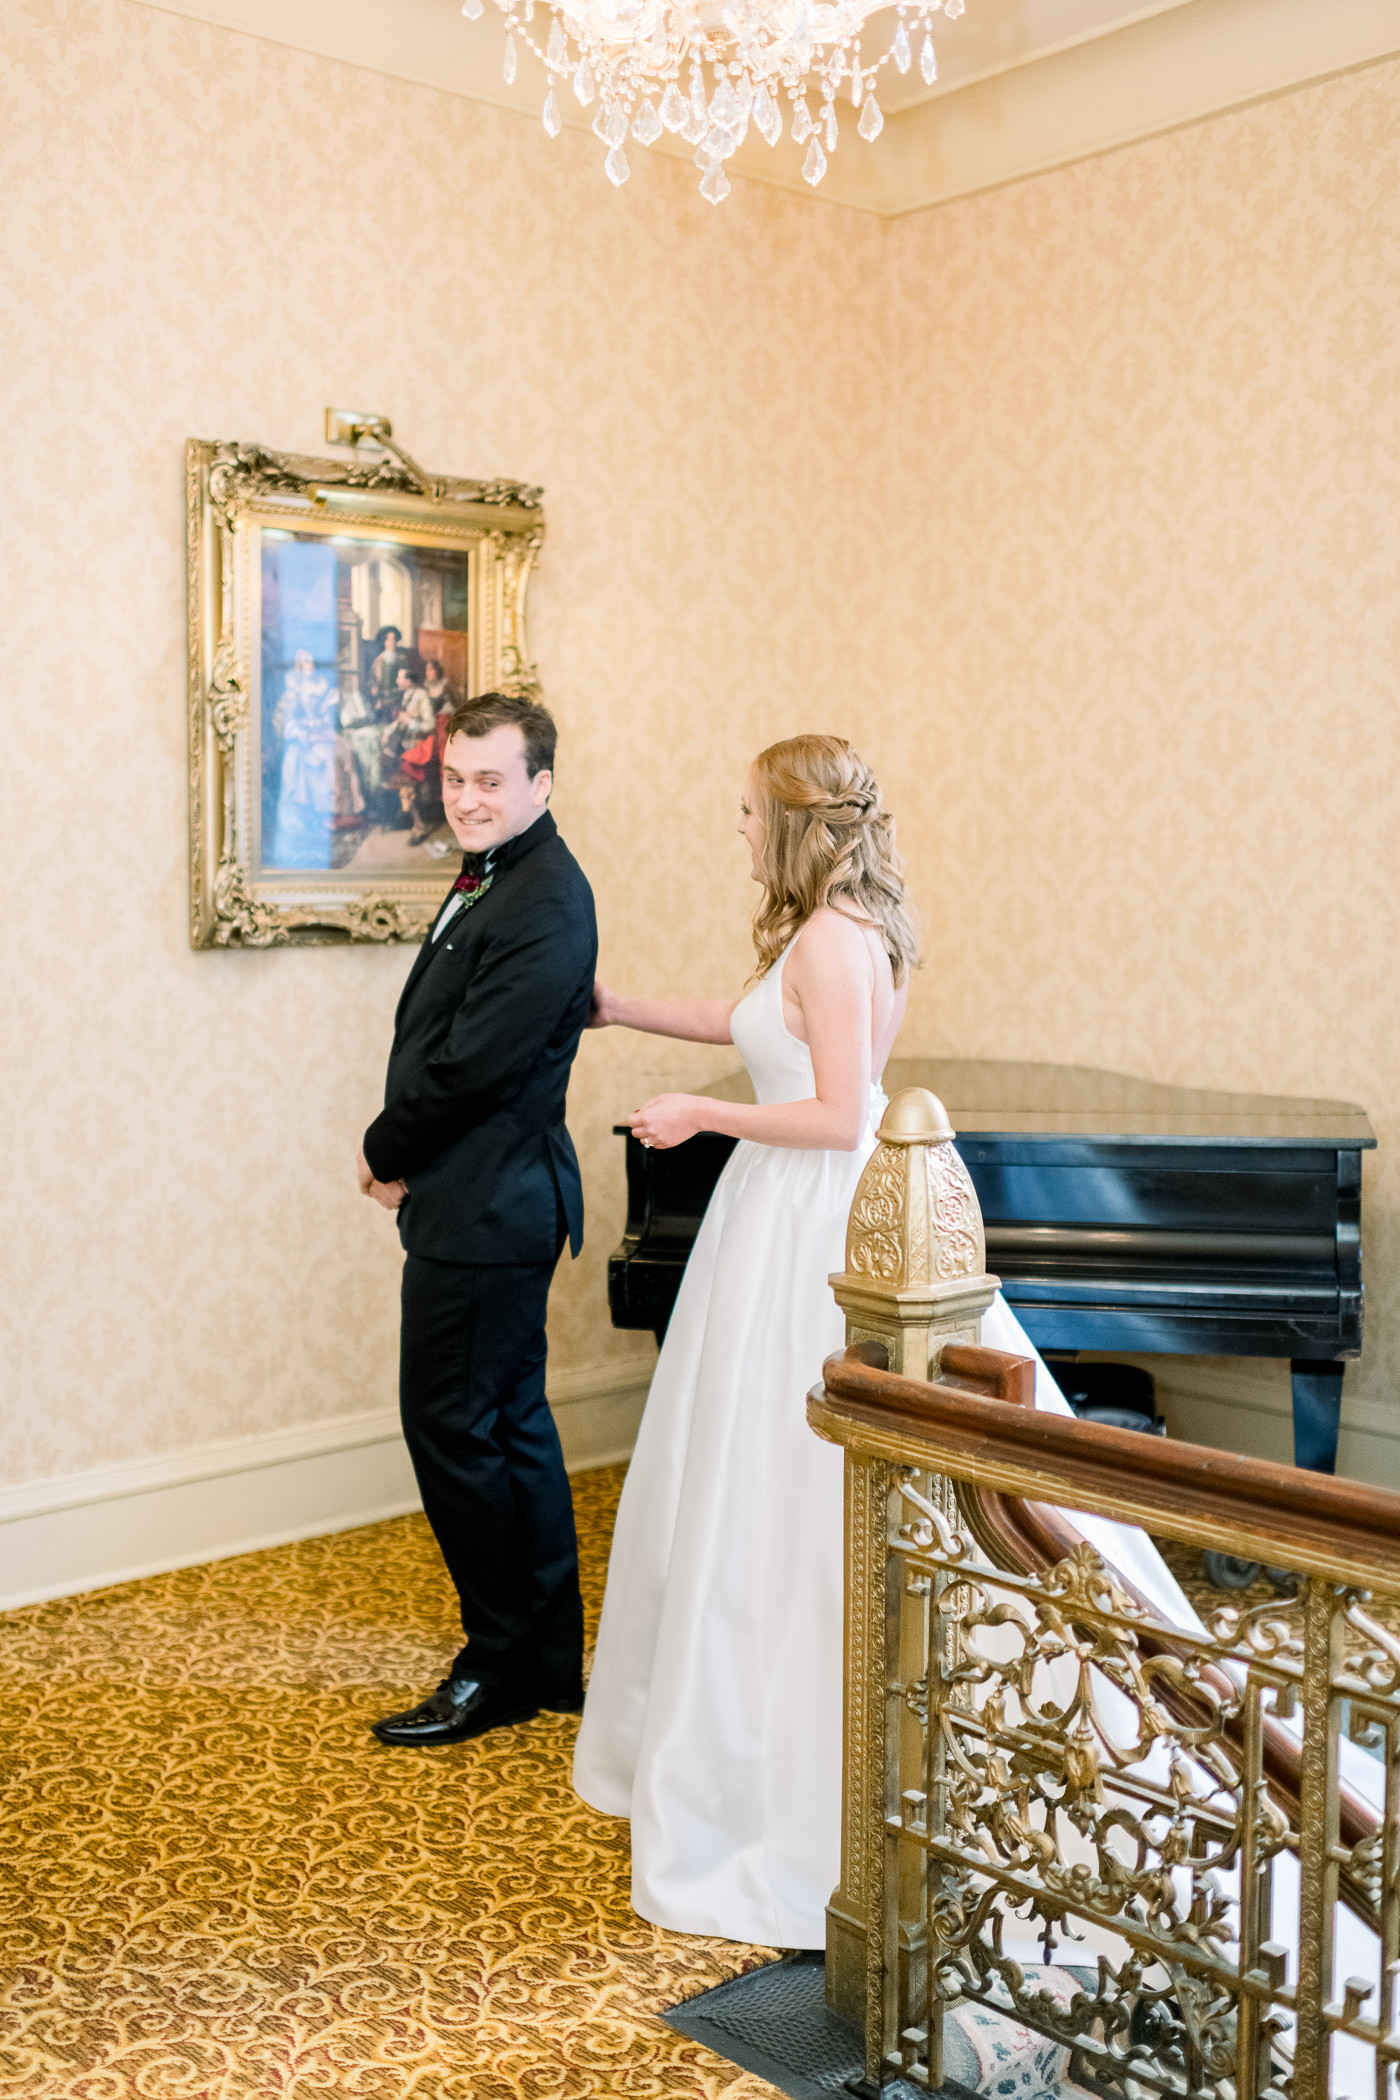 Pfister Hotel Wedding Photographers - Larissa Marie Photography